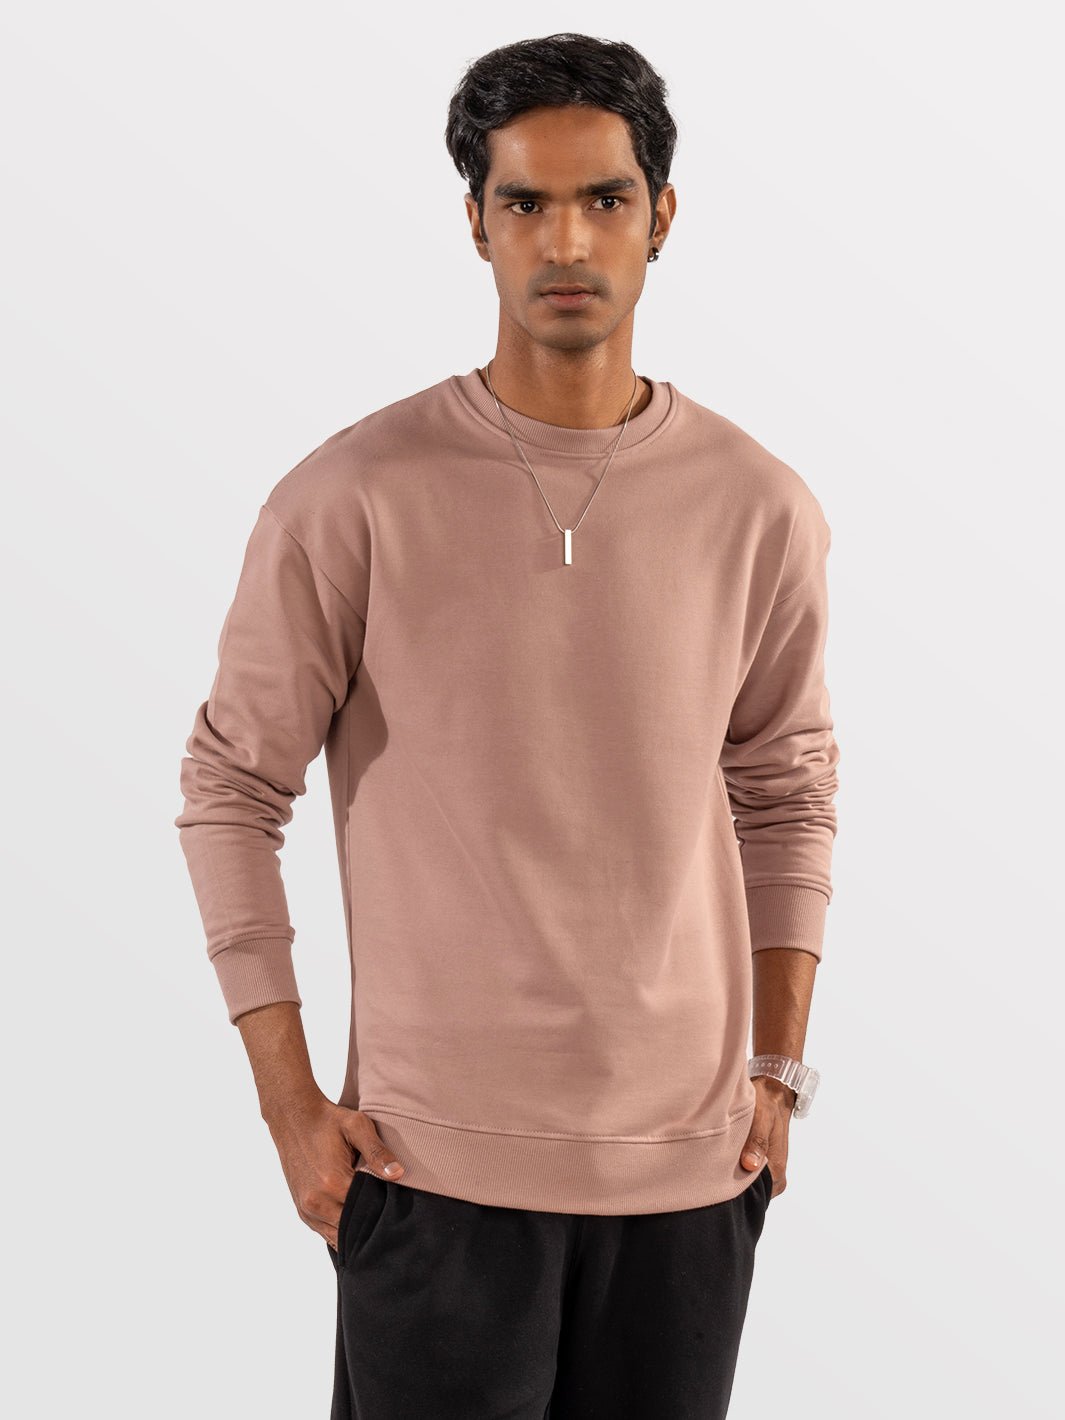 Solids: Onion Pink Sweatshirt front view 1